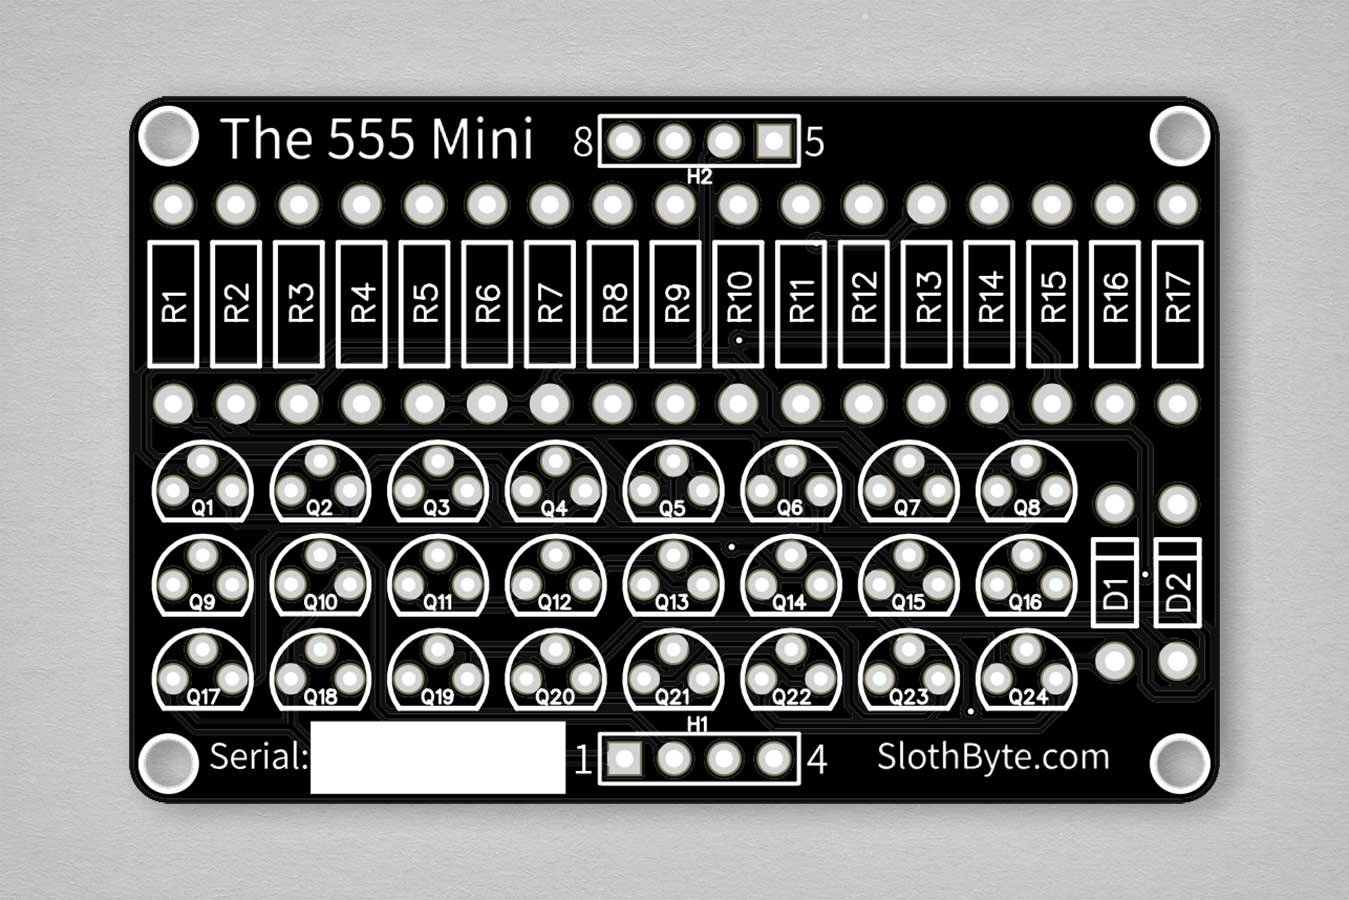 The 555 Mini